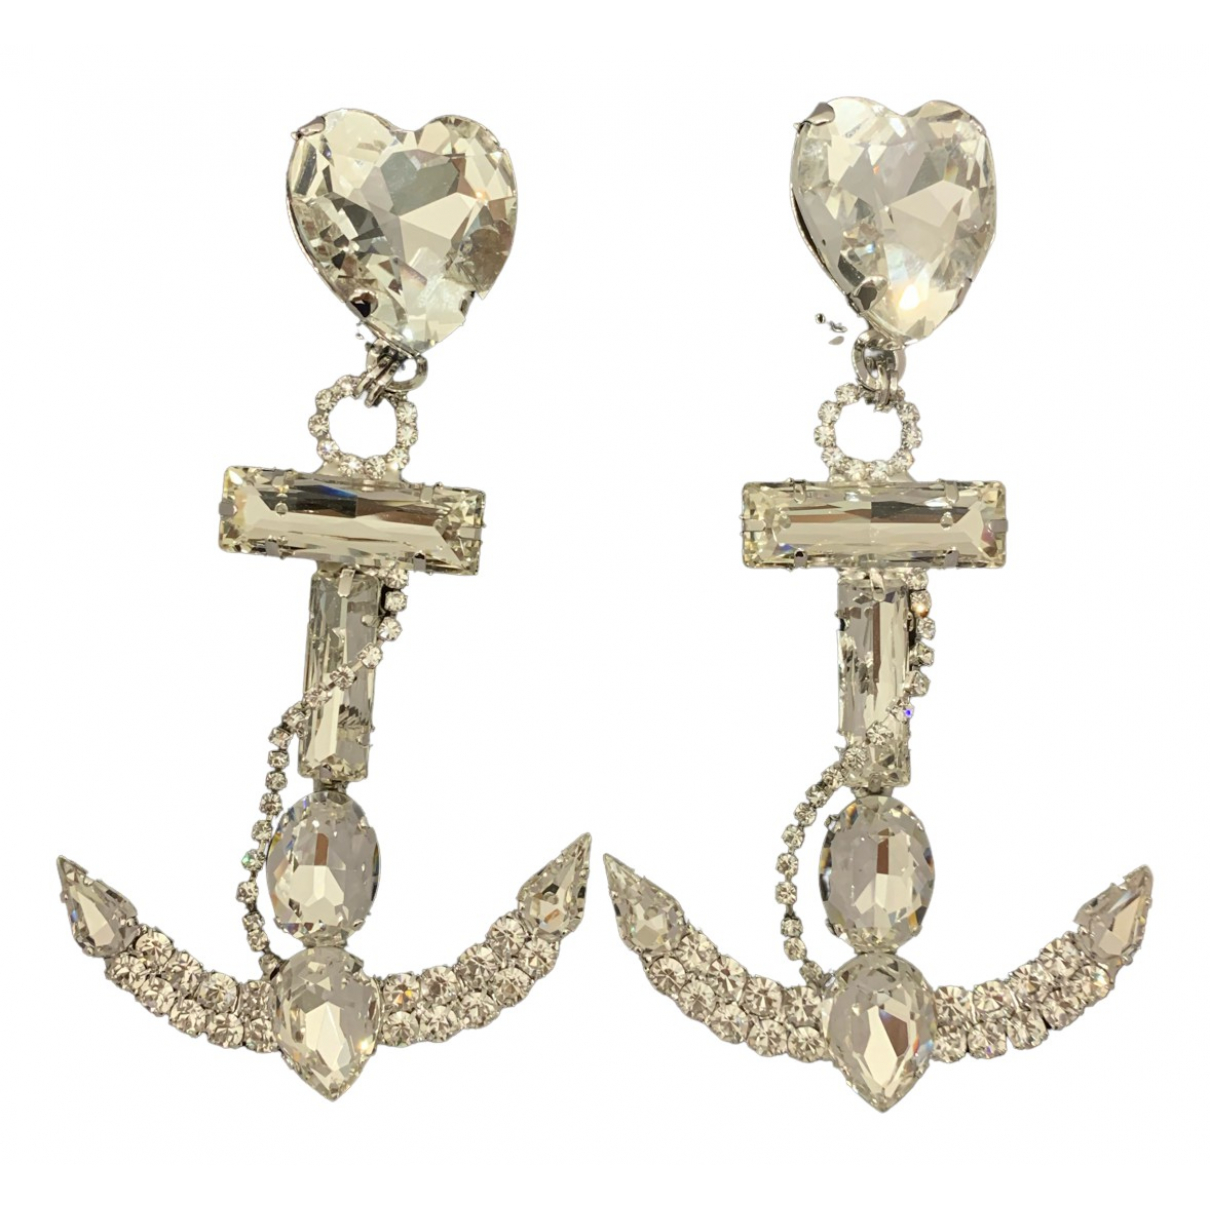 High quality new Crystal Fashion earrings